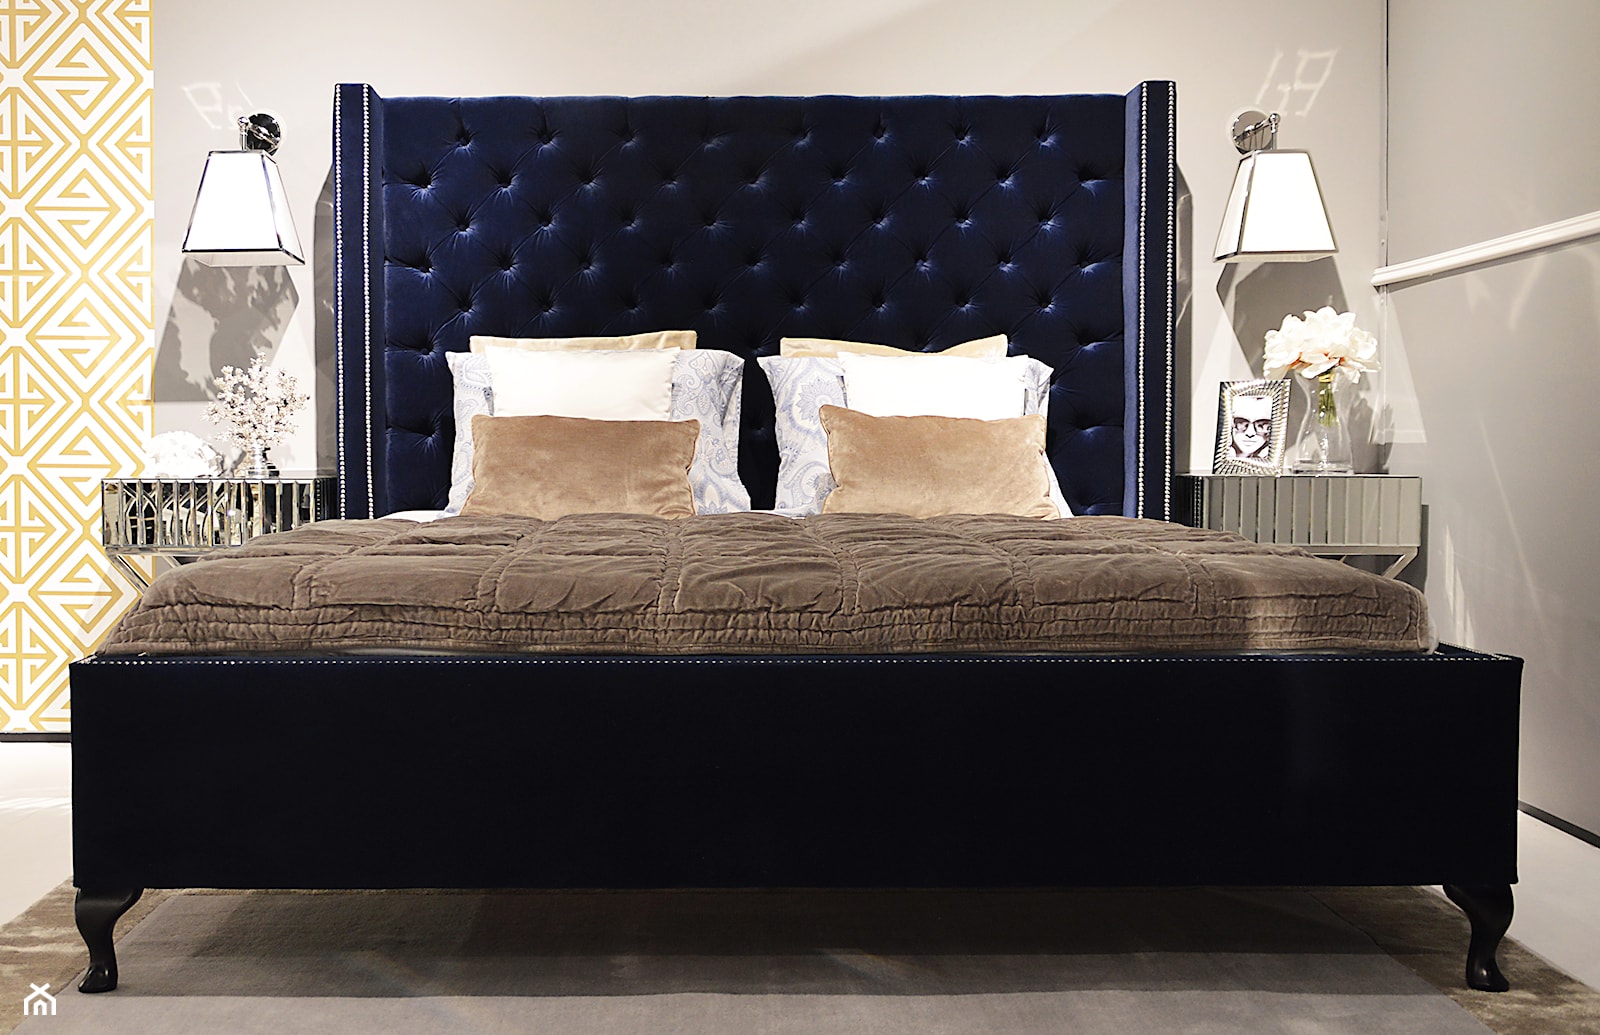 Łóżko sypialniane glamour - zdjęcie od PRIMAVERA-HOME.COM - Homebook